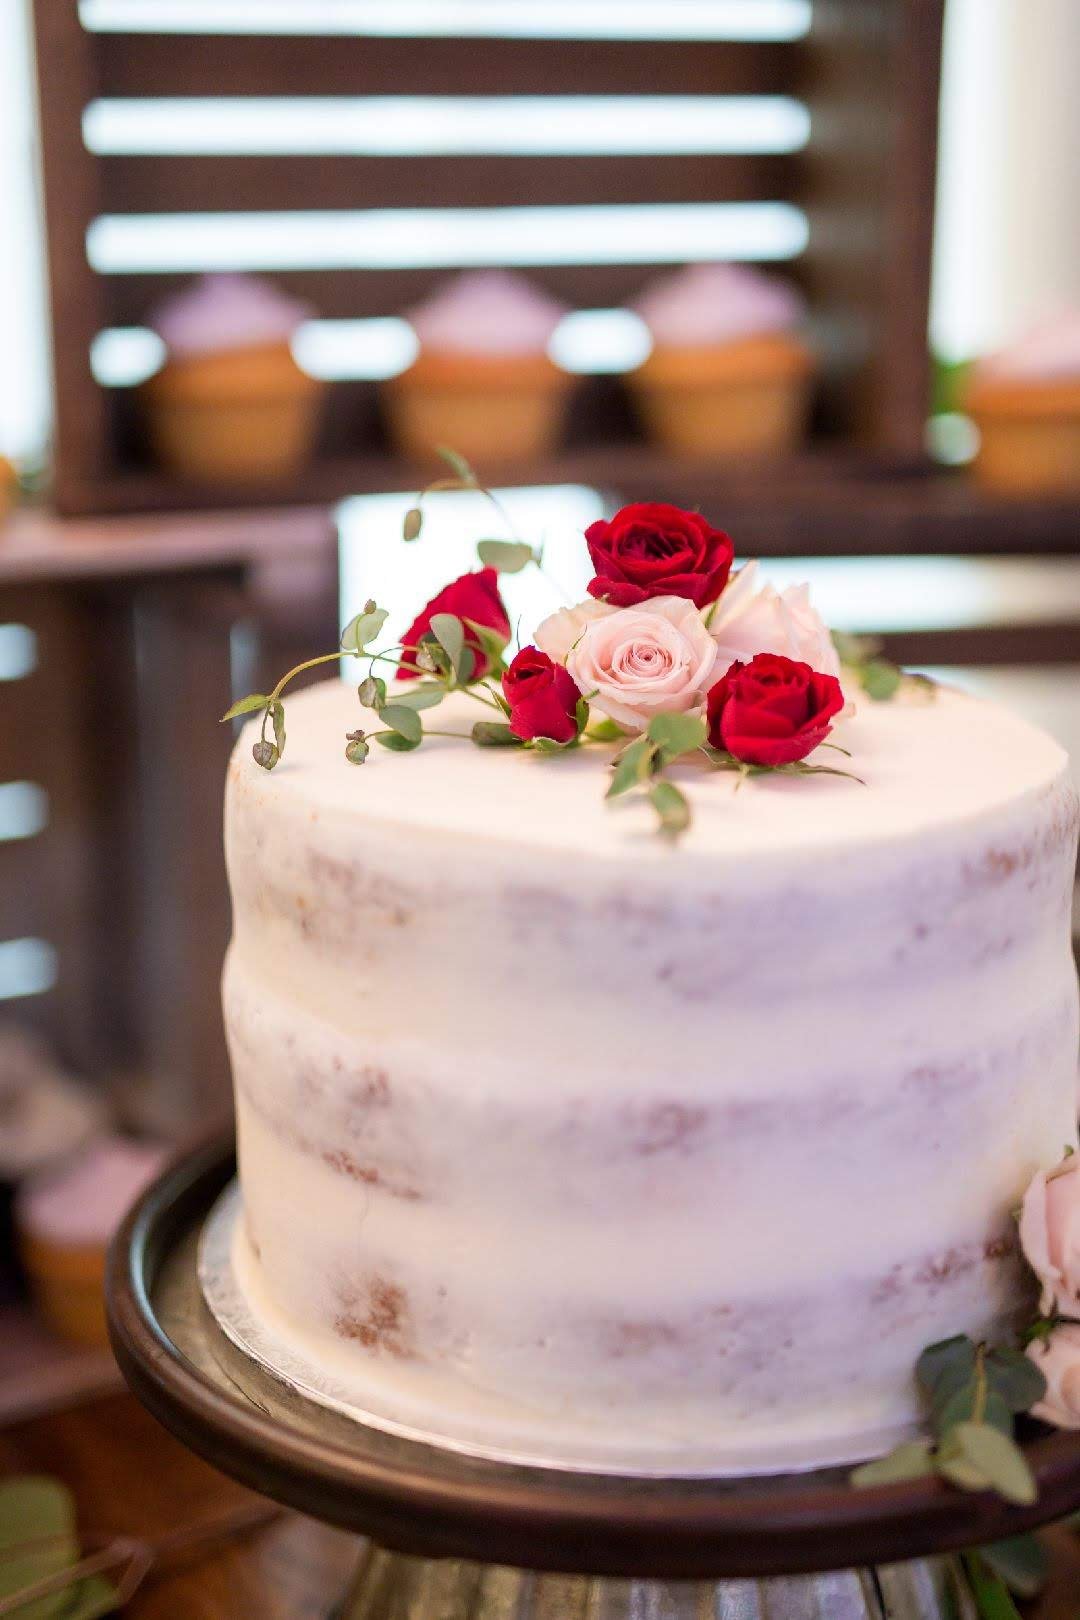 Naked wedding cake with fresh flowers.jpg